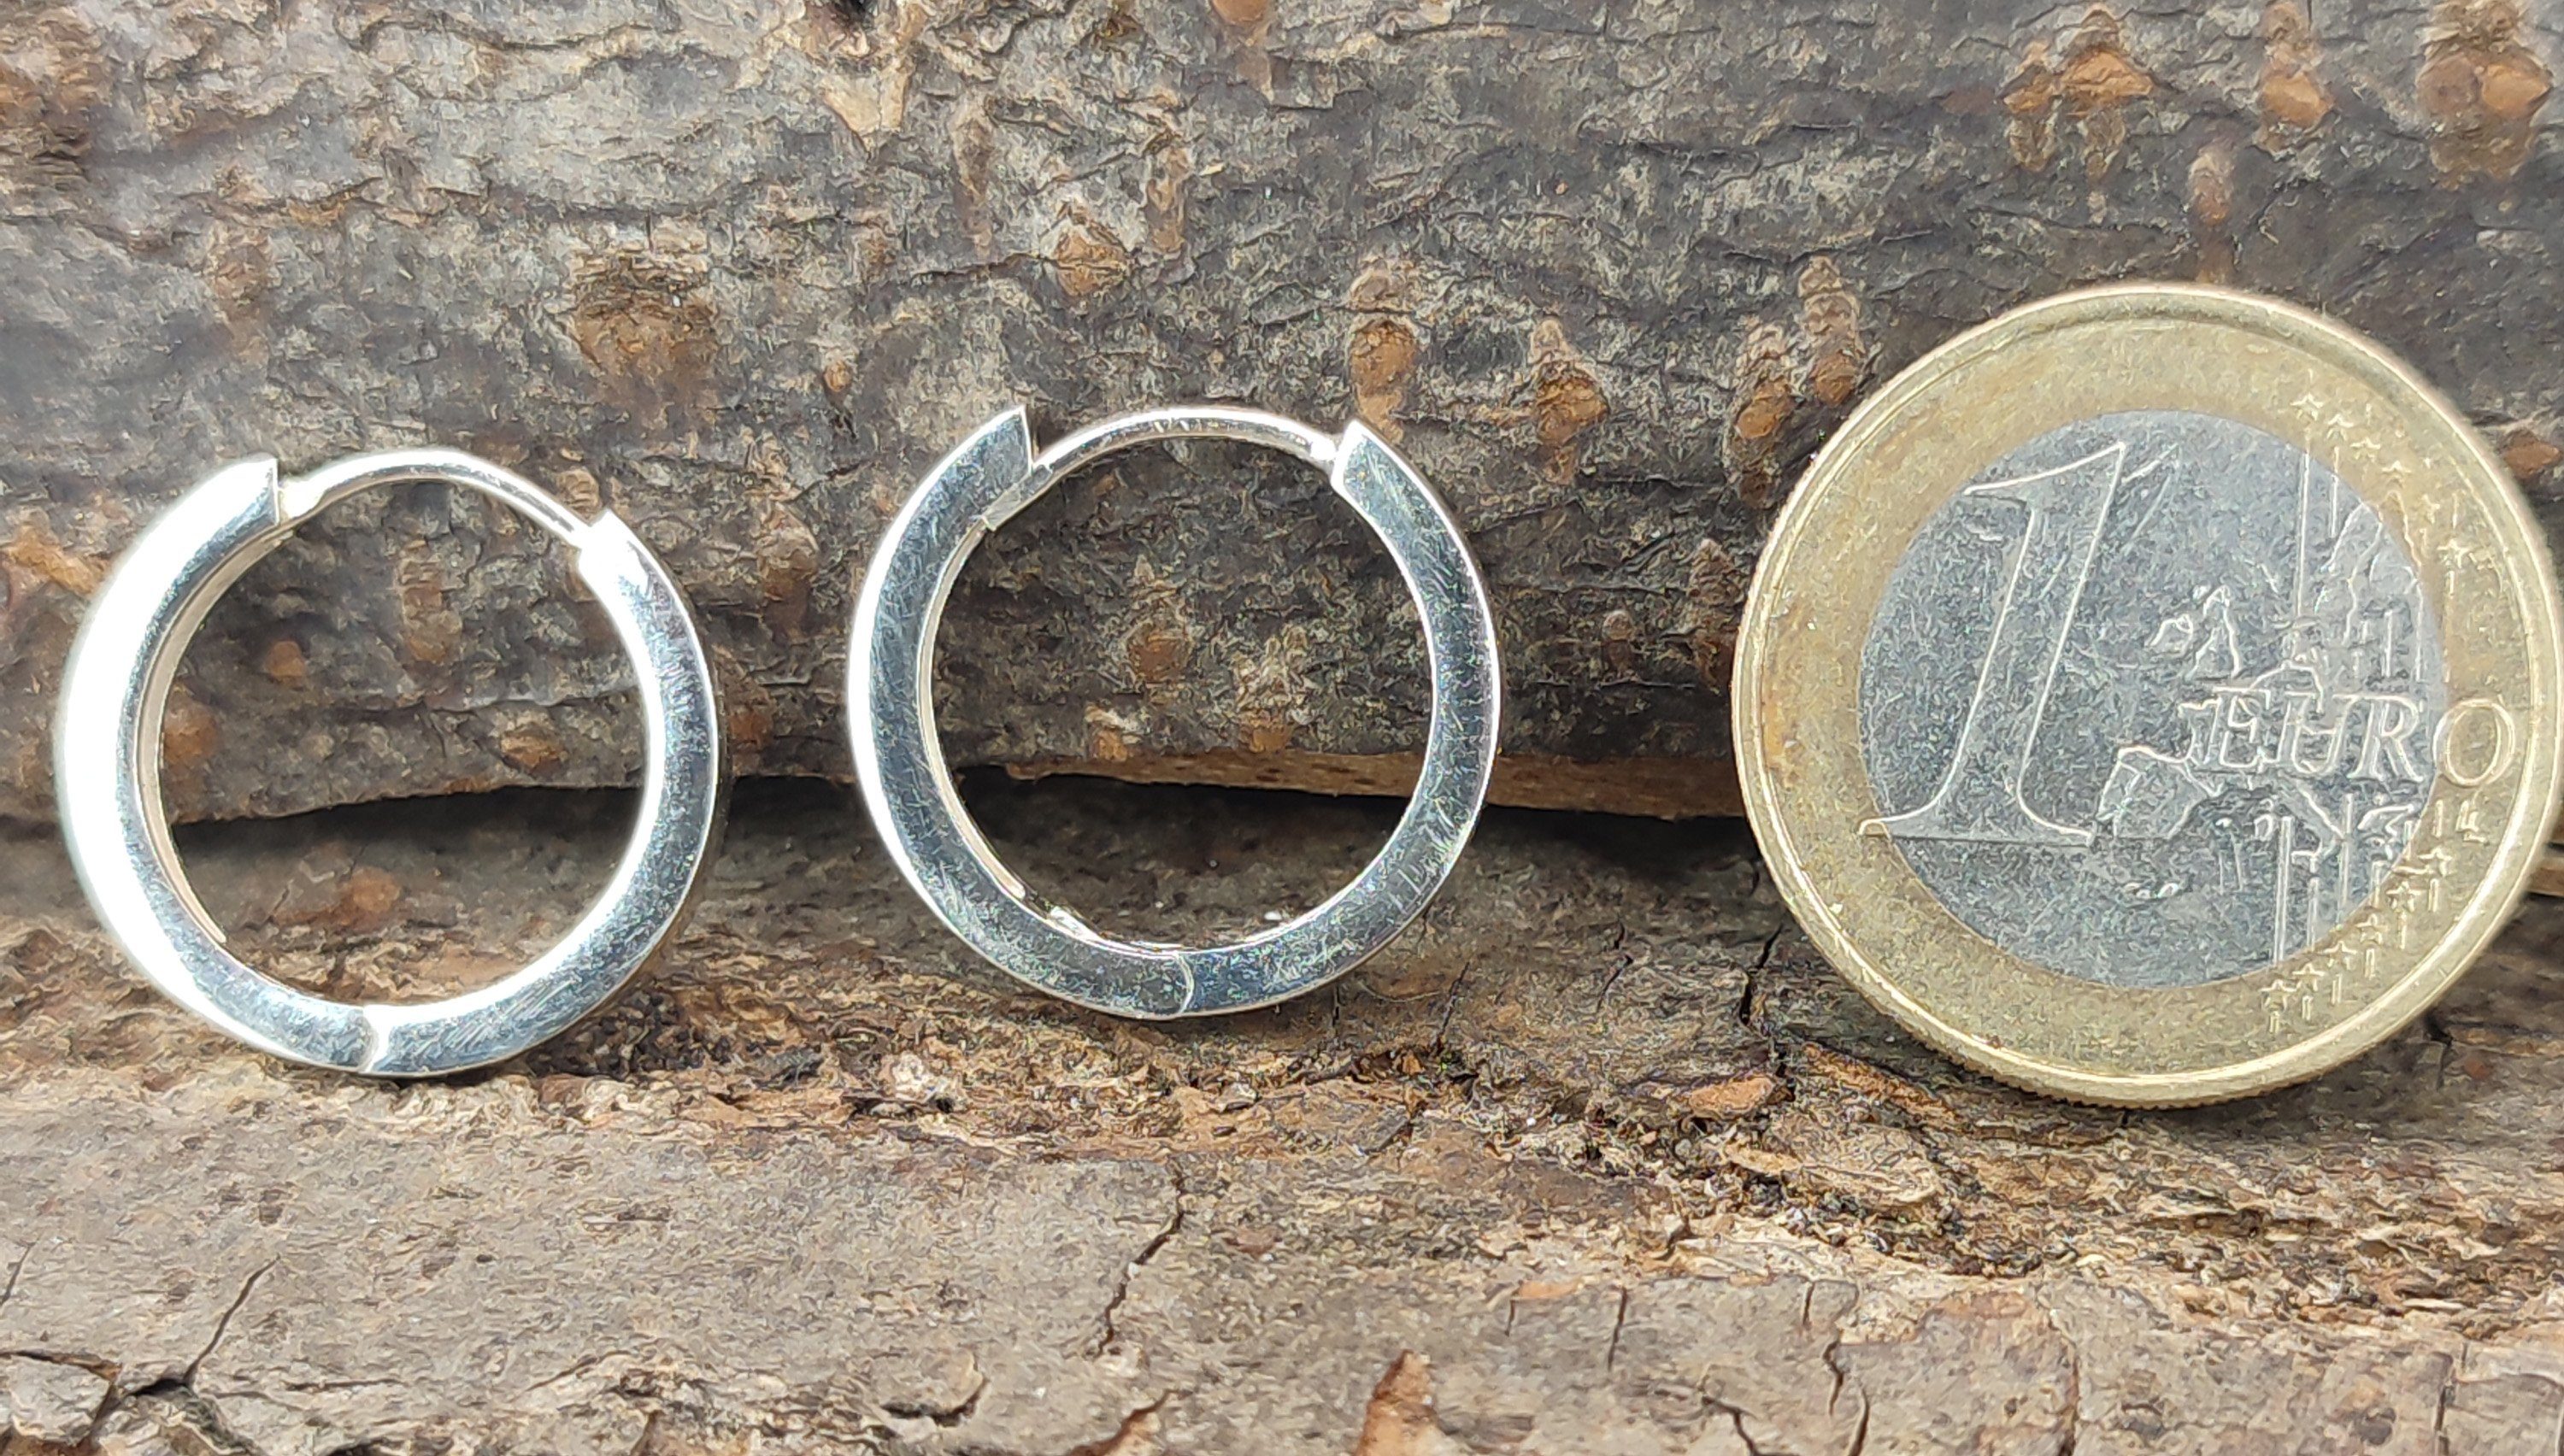 Kiss of Leather Silber Ohrring-Set Paarpreis Klappcreole Ohr Ohrringe Kreolen 20mm 925